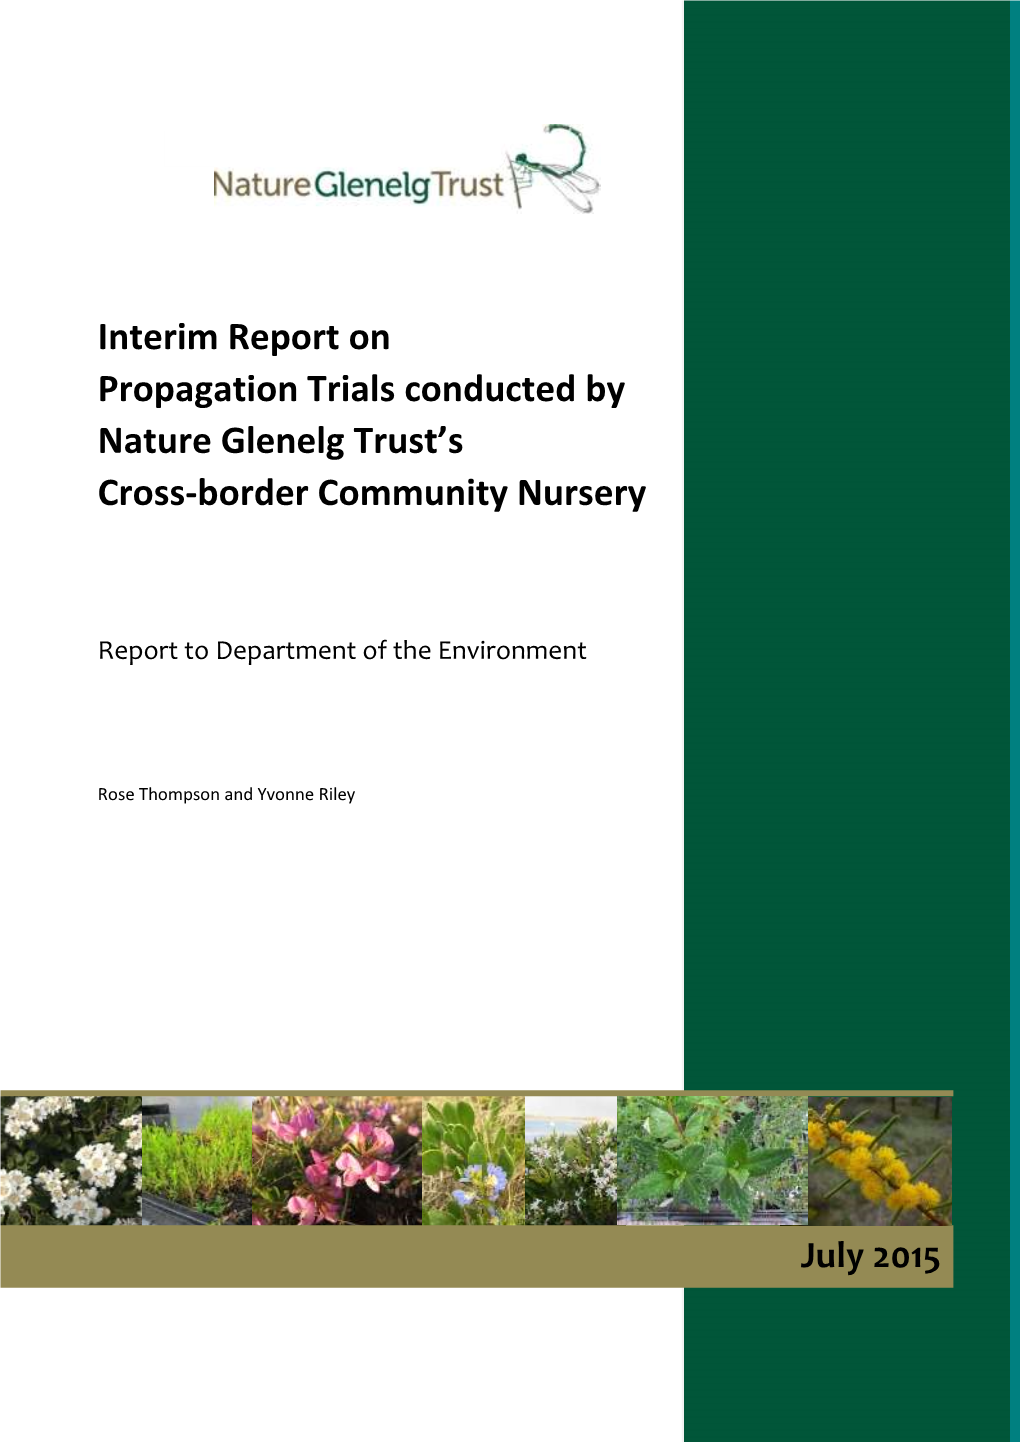 Interim Report on Propagation Trials Conducted by Nature Glenelg Trust's Cross-Border Community Nursery